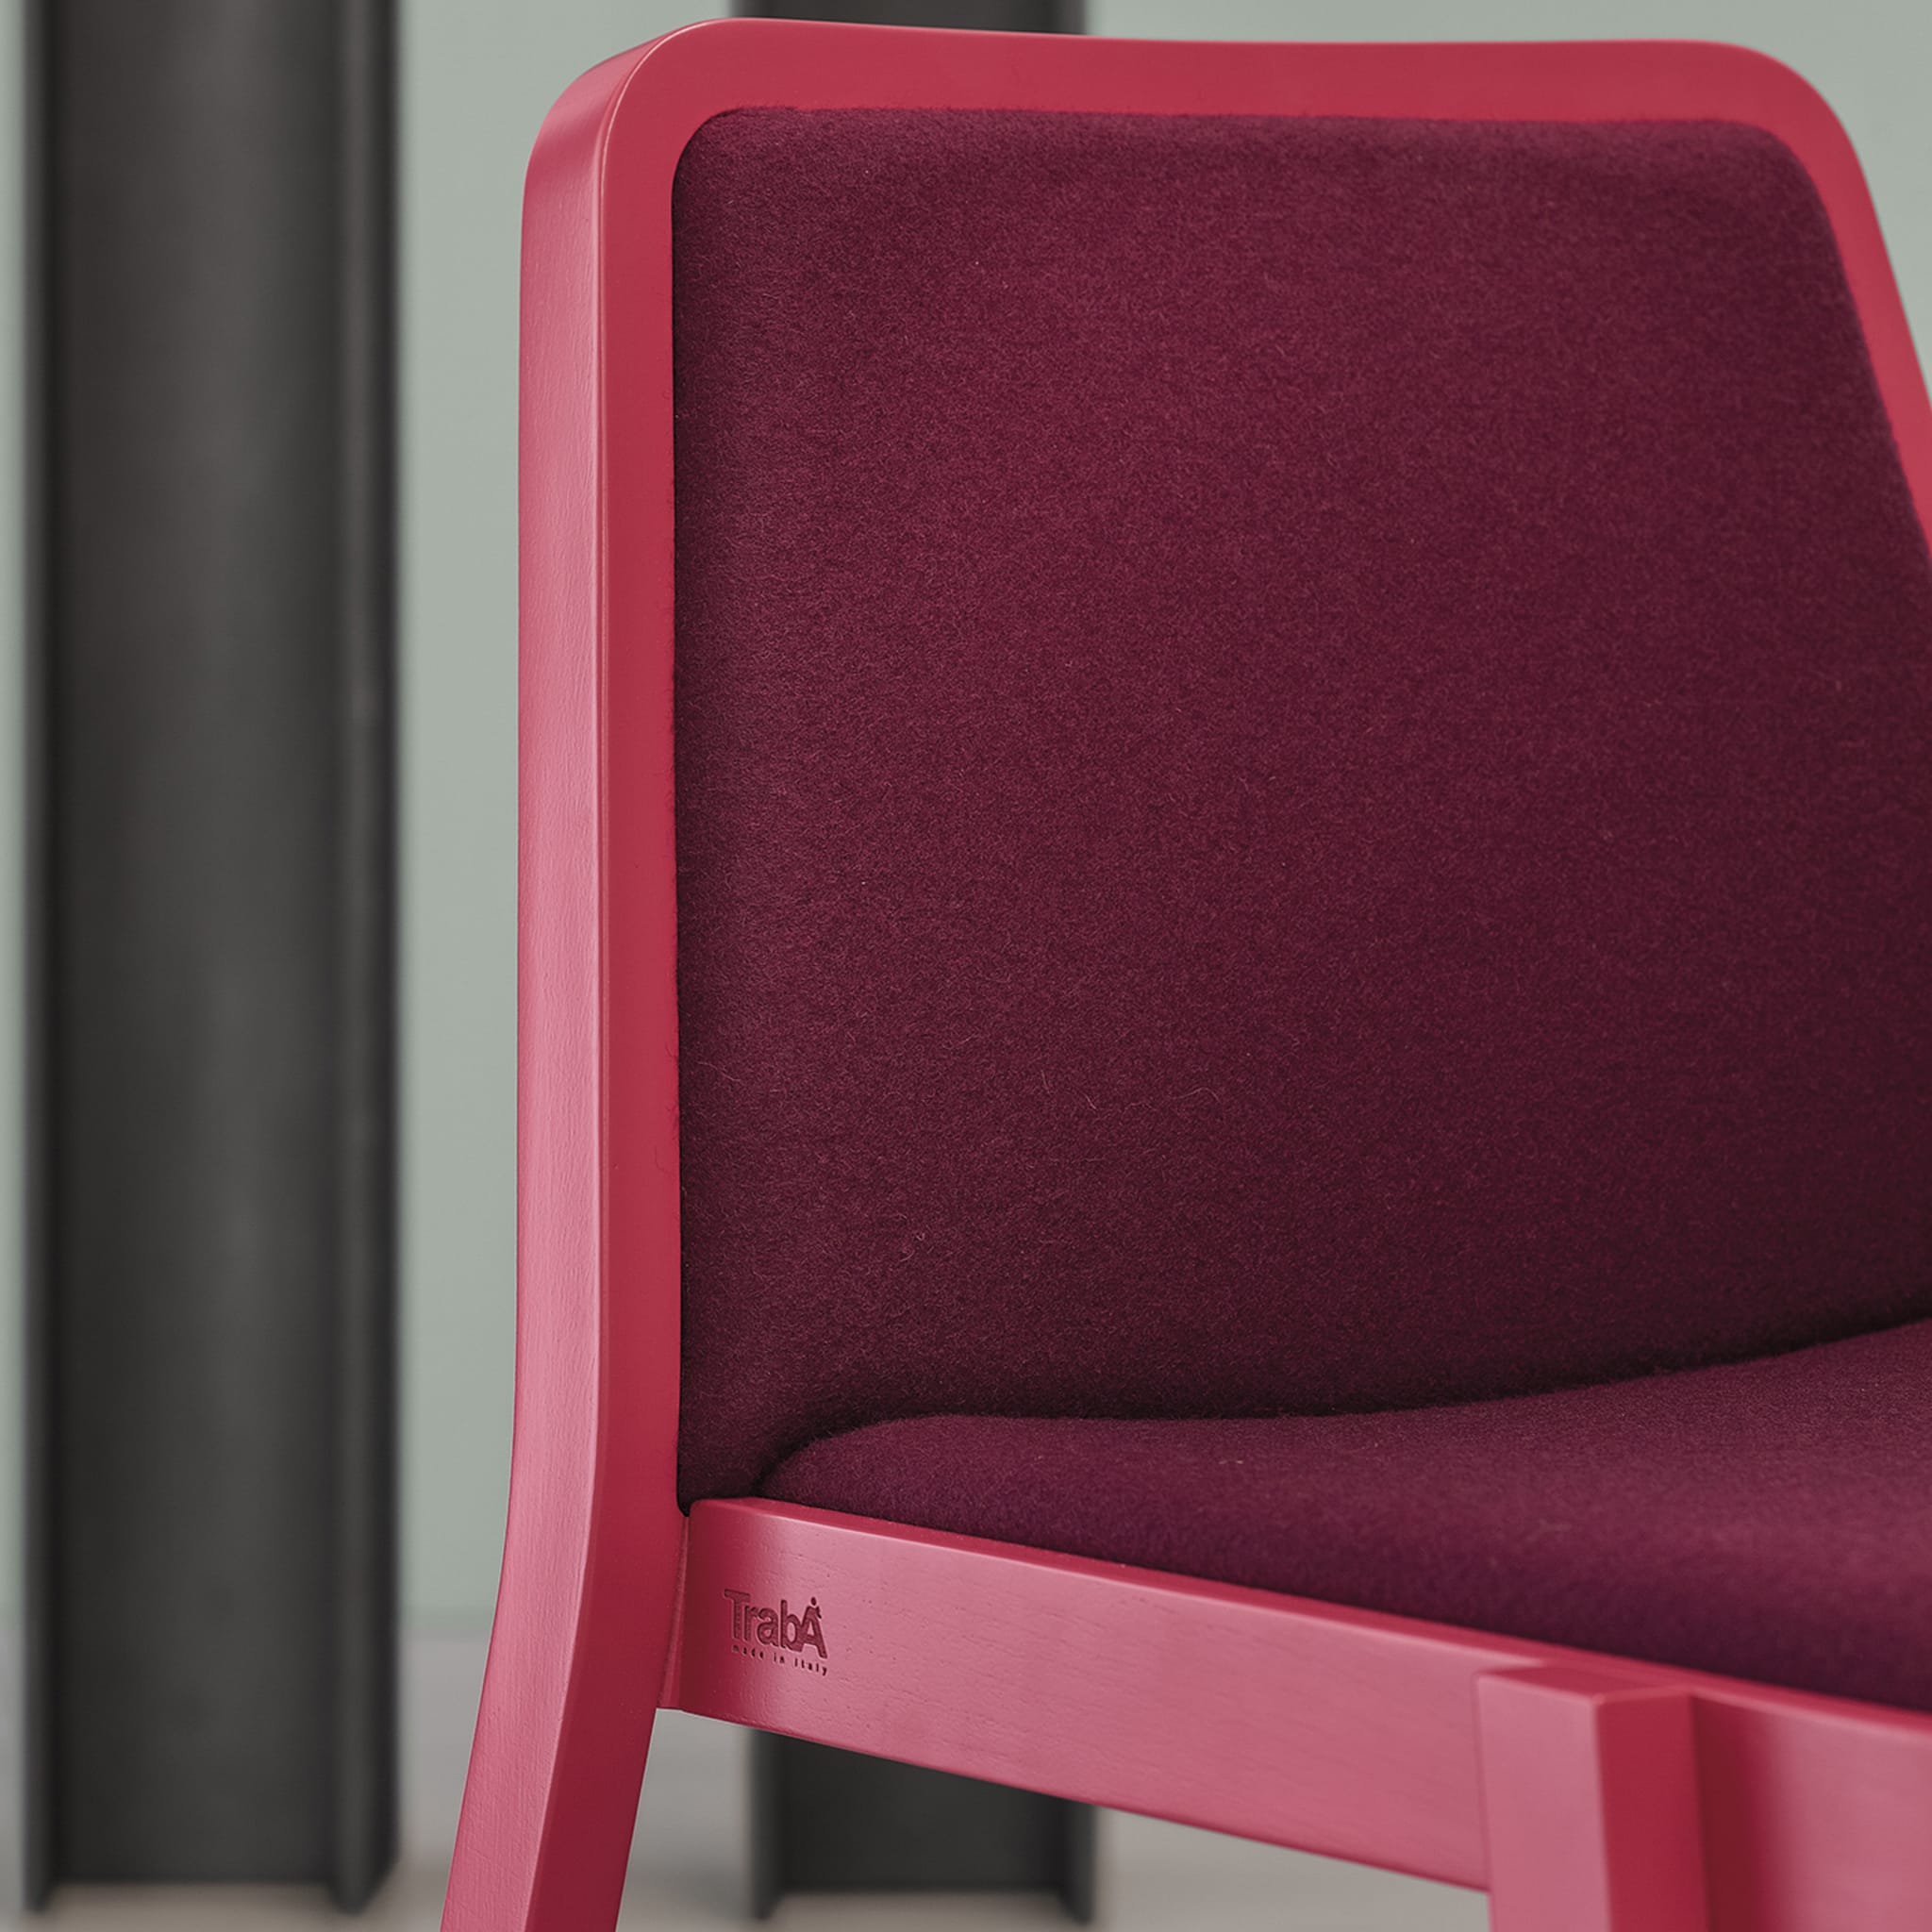 Roxanne Pink Chair by Emilio Nanni - Alternative view 1